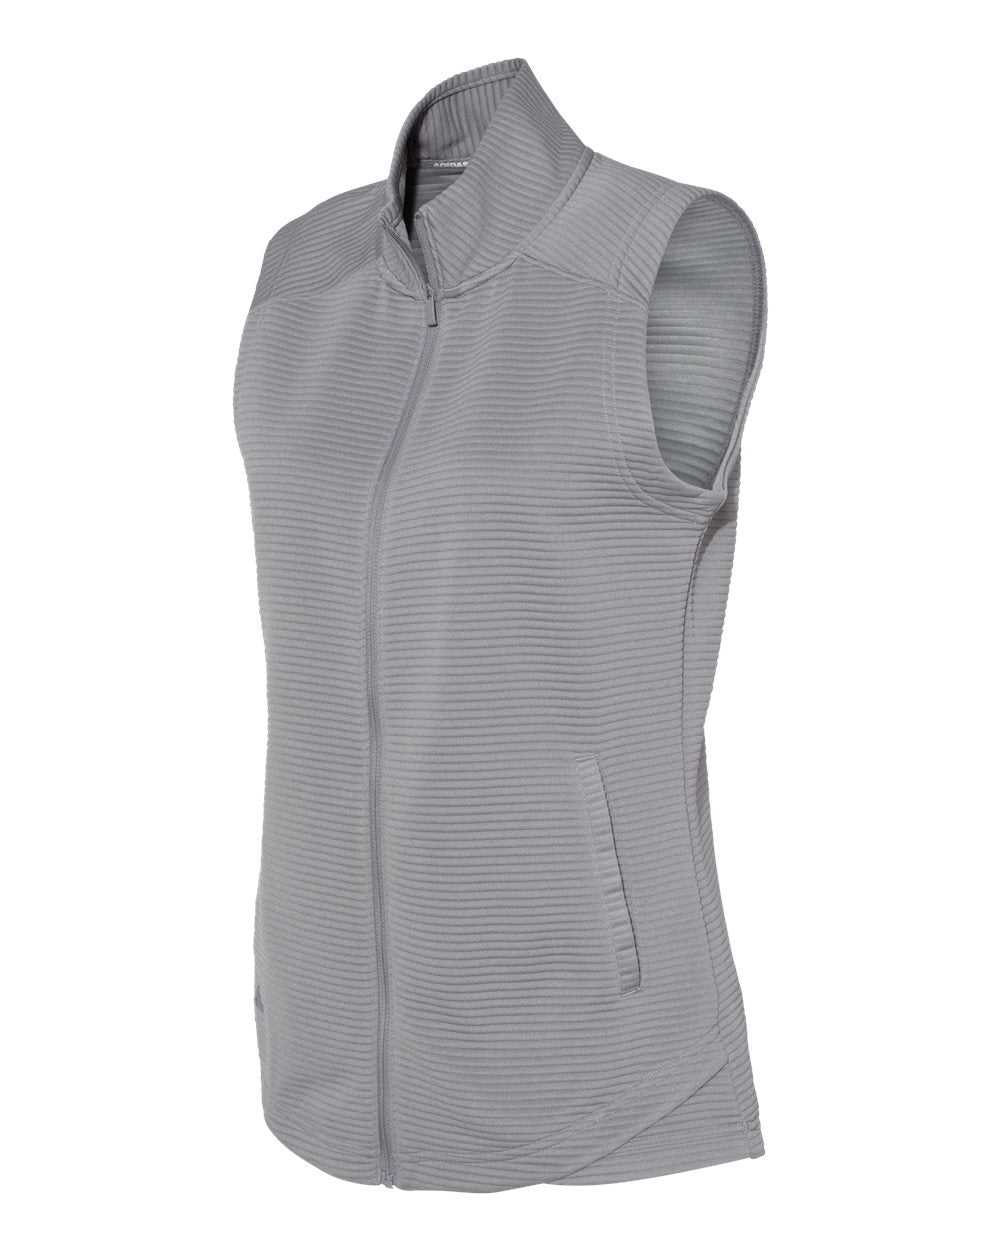 Adidas A417 Women's Textured Full-Zip Vest - Grey Three - HIT a Double